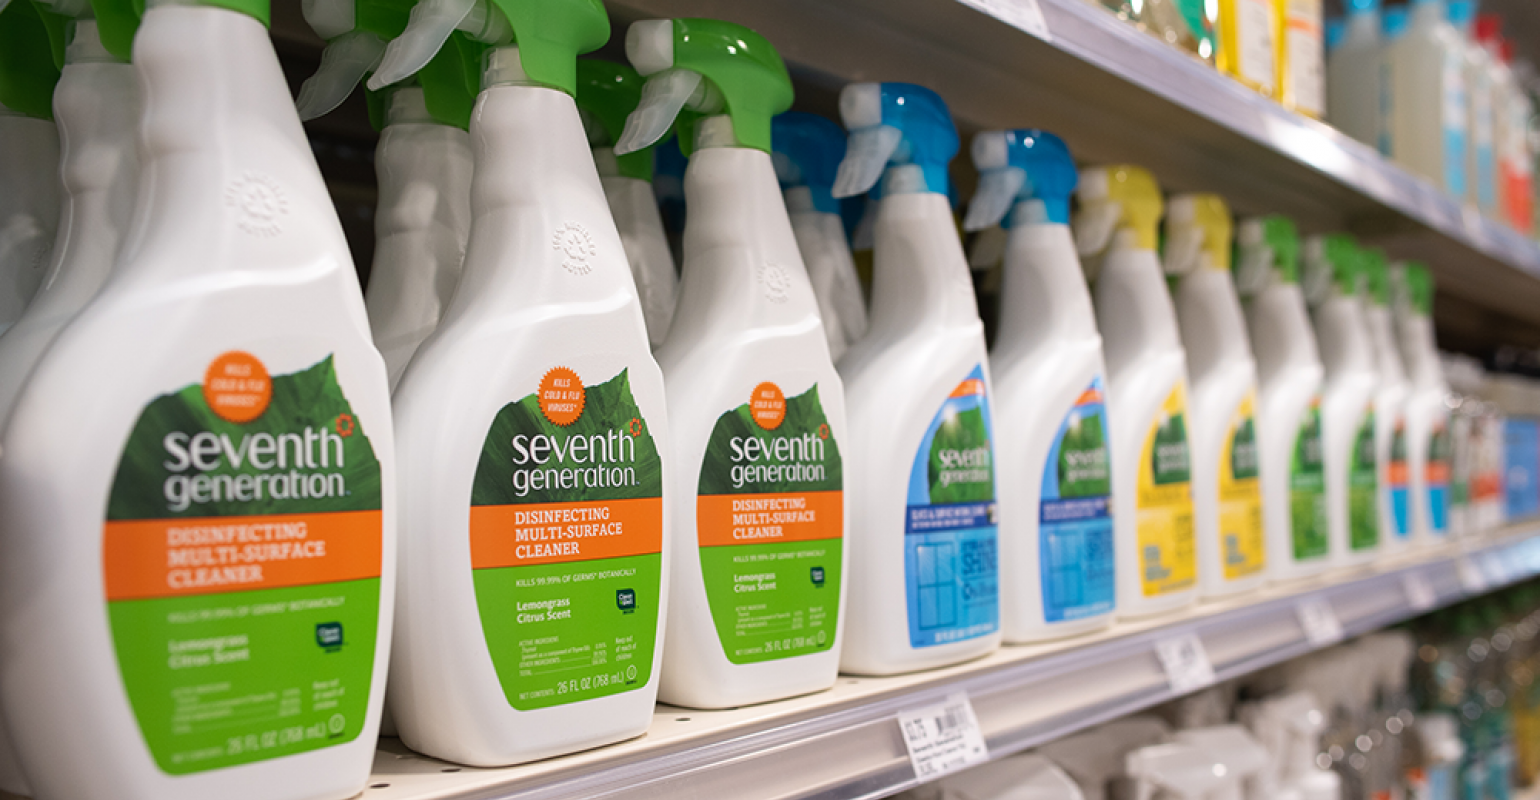 vlees Wirwar Koninklijke familie Home-care products come clean | Supermarket News